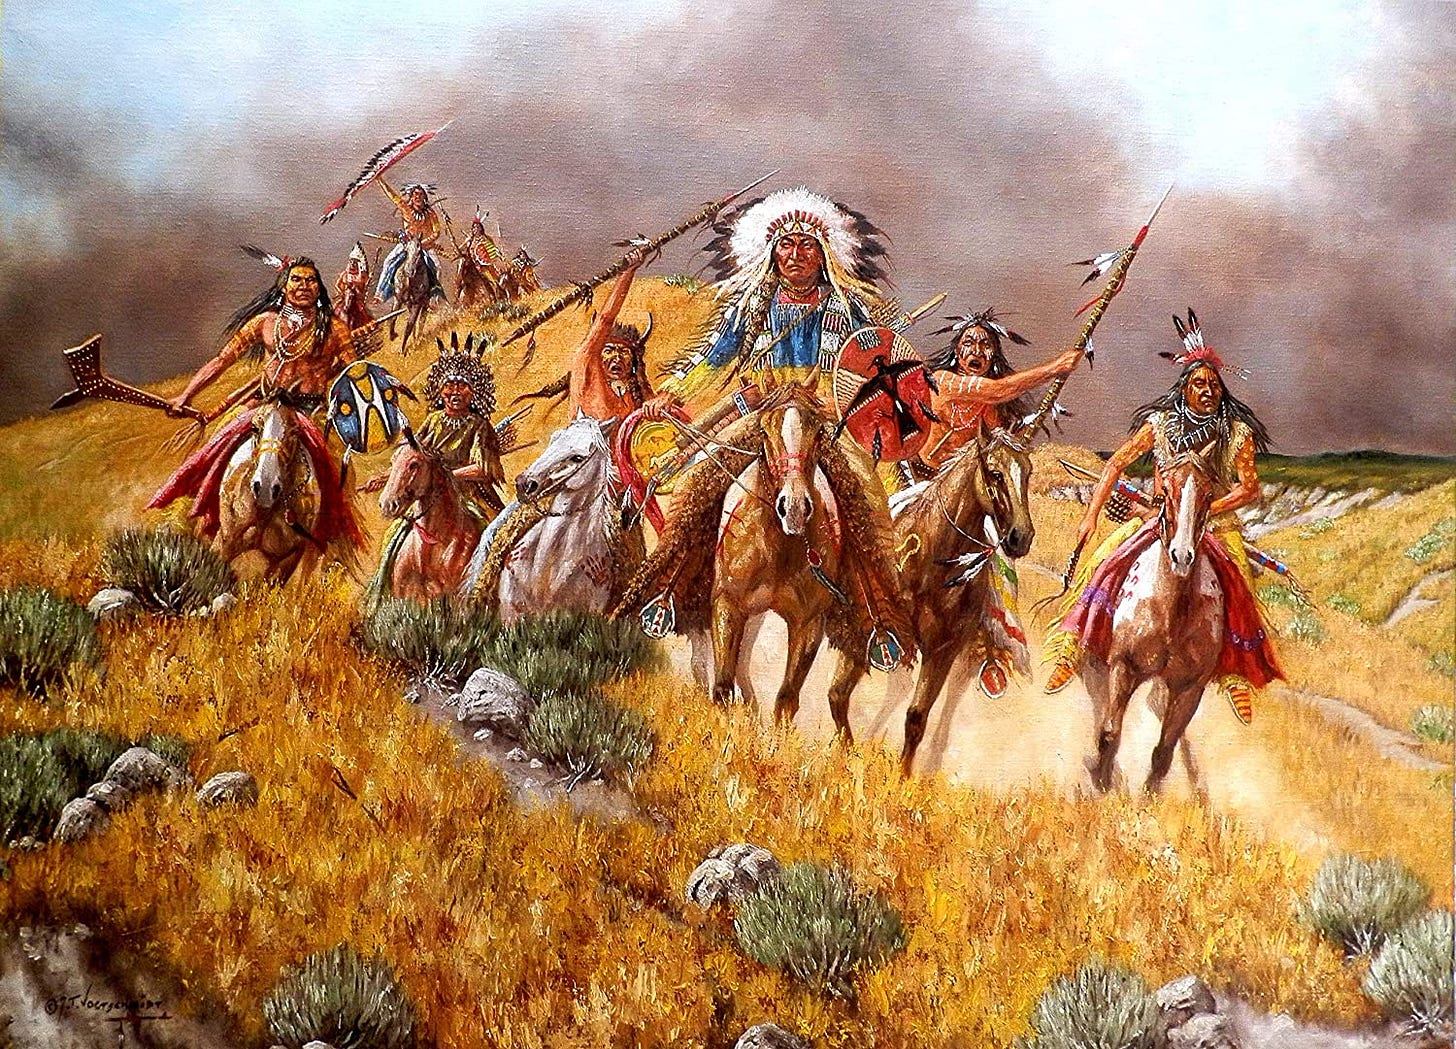 Amazon.com: 3D Wall Art 11 x 14 On Metal Apache Warrior One Last Battle  Native American Indian Art by Jeroen Vogtschmidt: Posters & Prints